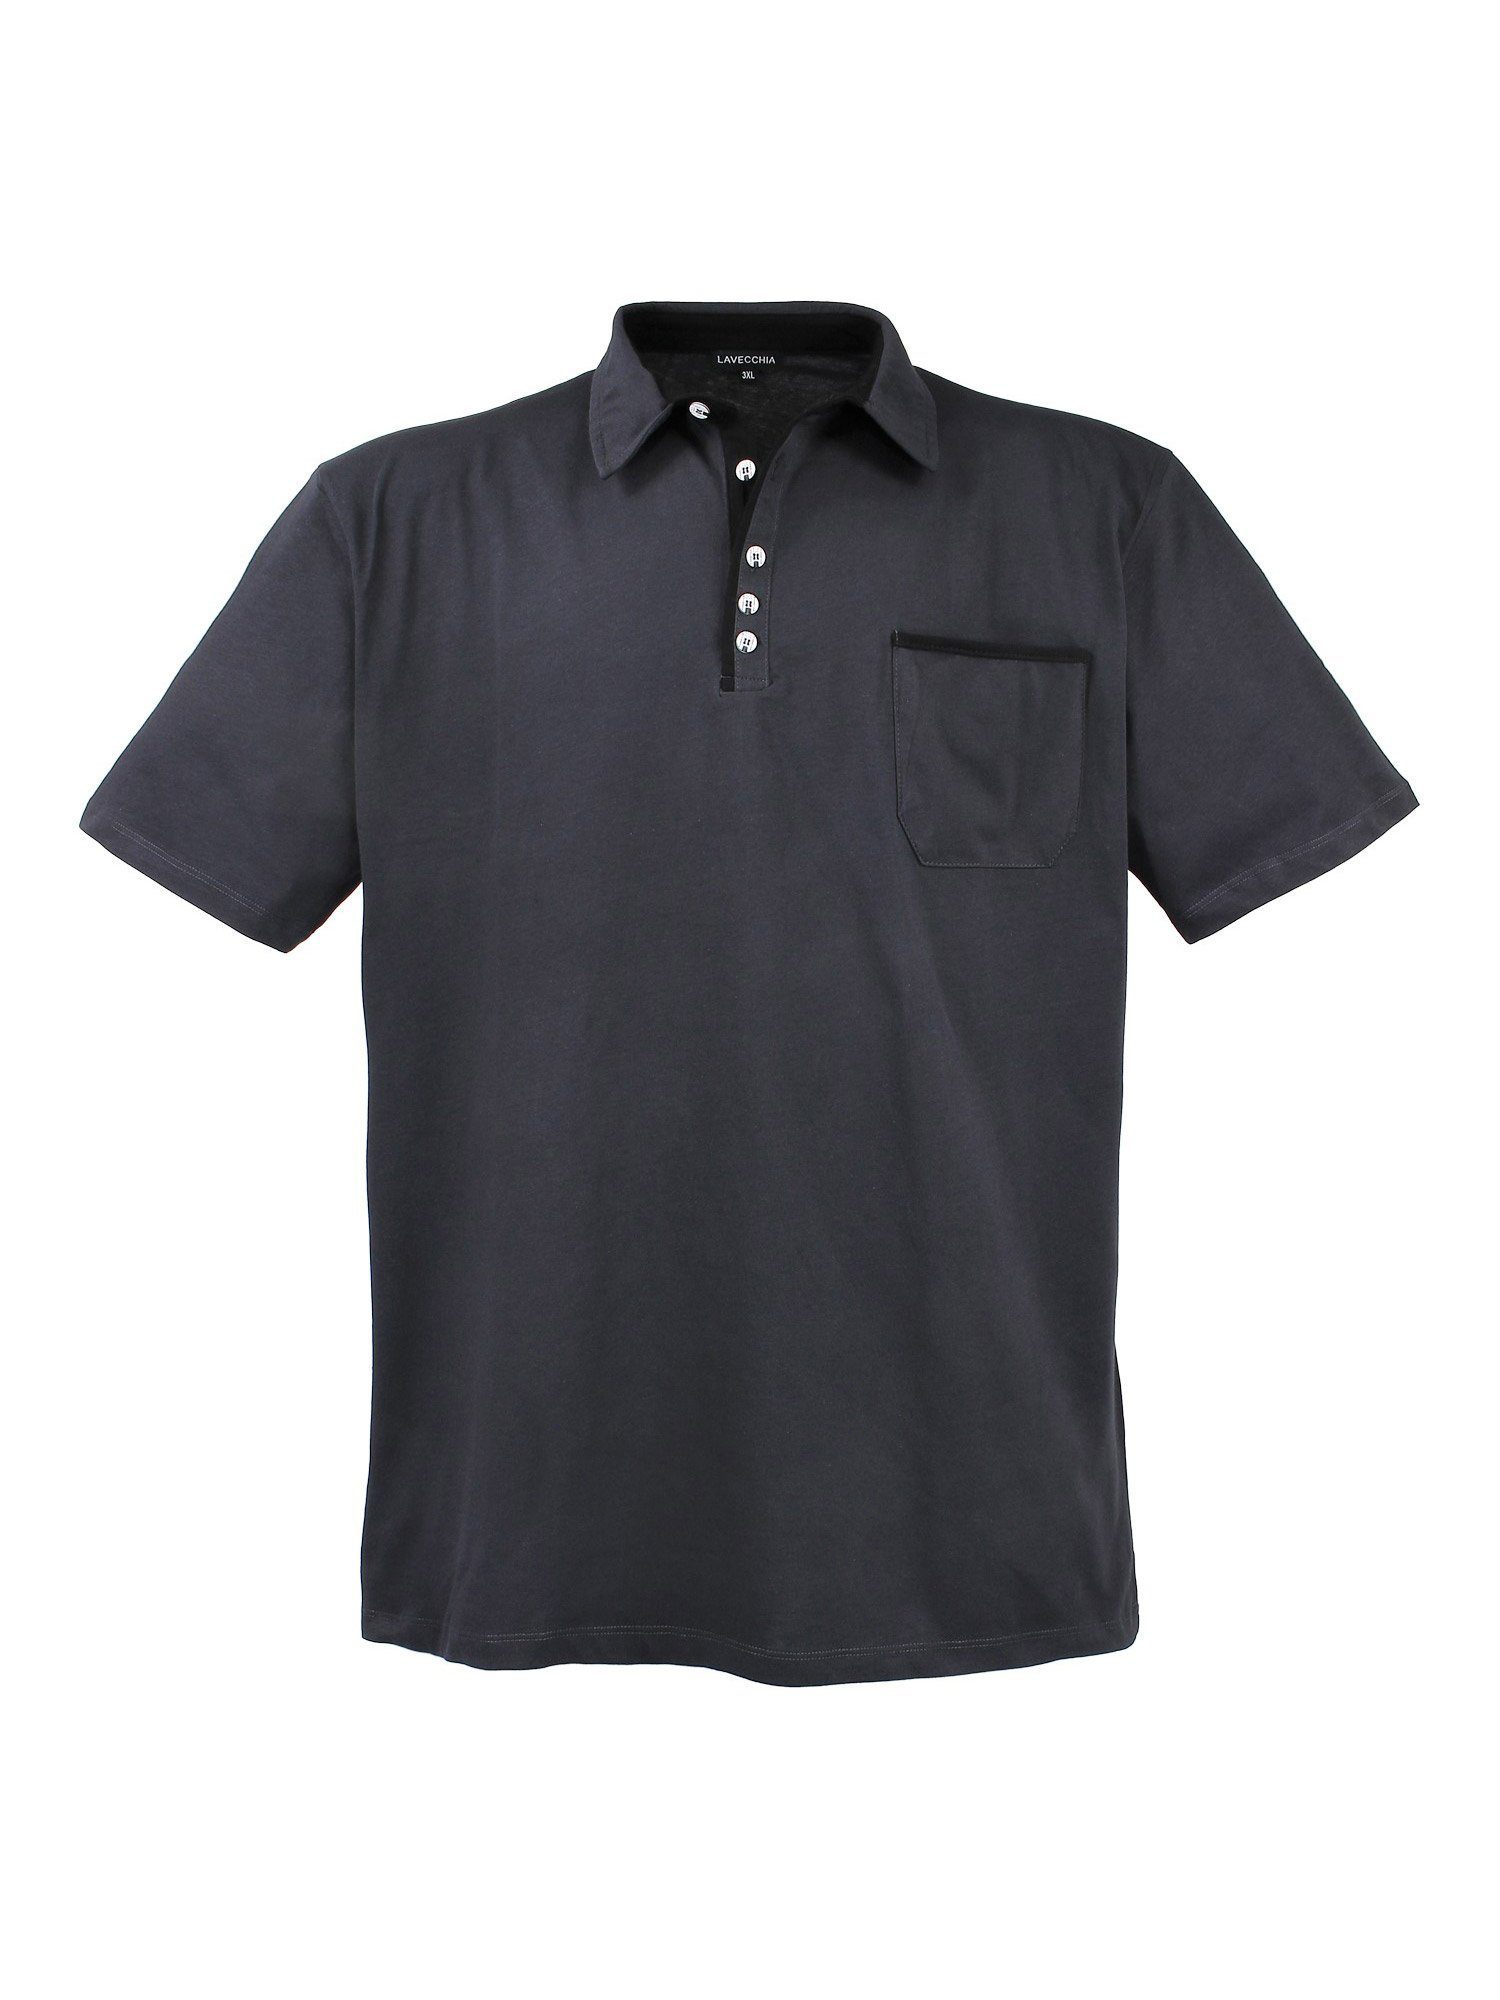 Shirt Herren Polo Polo Herren LV-1701 Lavecchia Shirt anthrazit Übergrößen Poloshirt